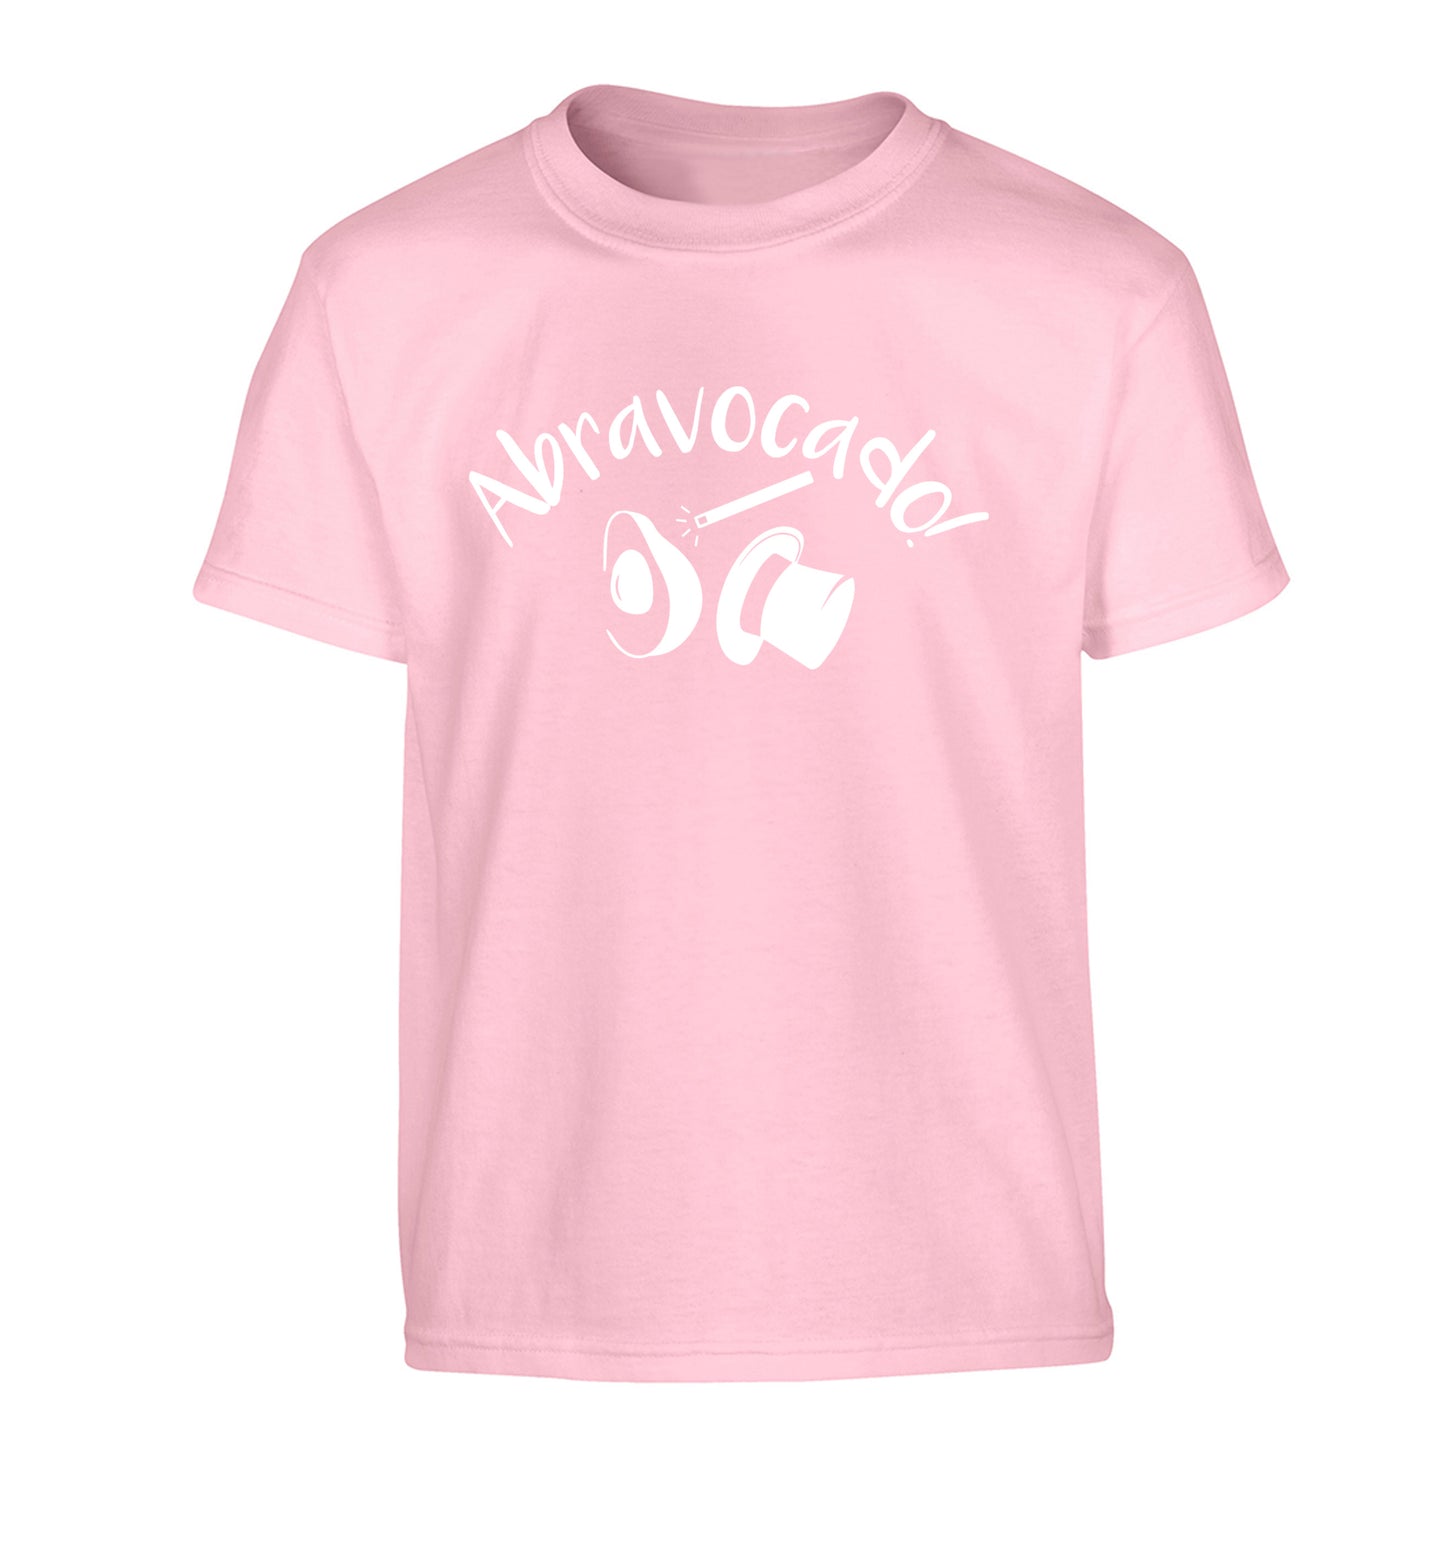 Abravocado Children's light pink Tshirt 12-14 Years